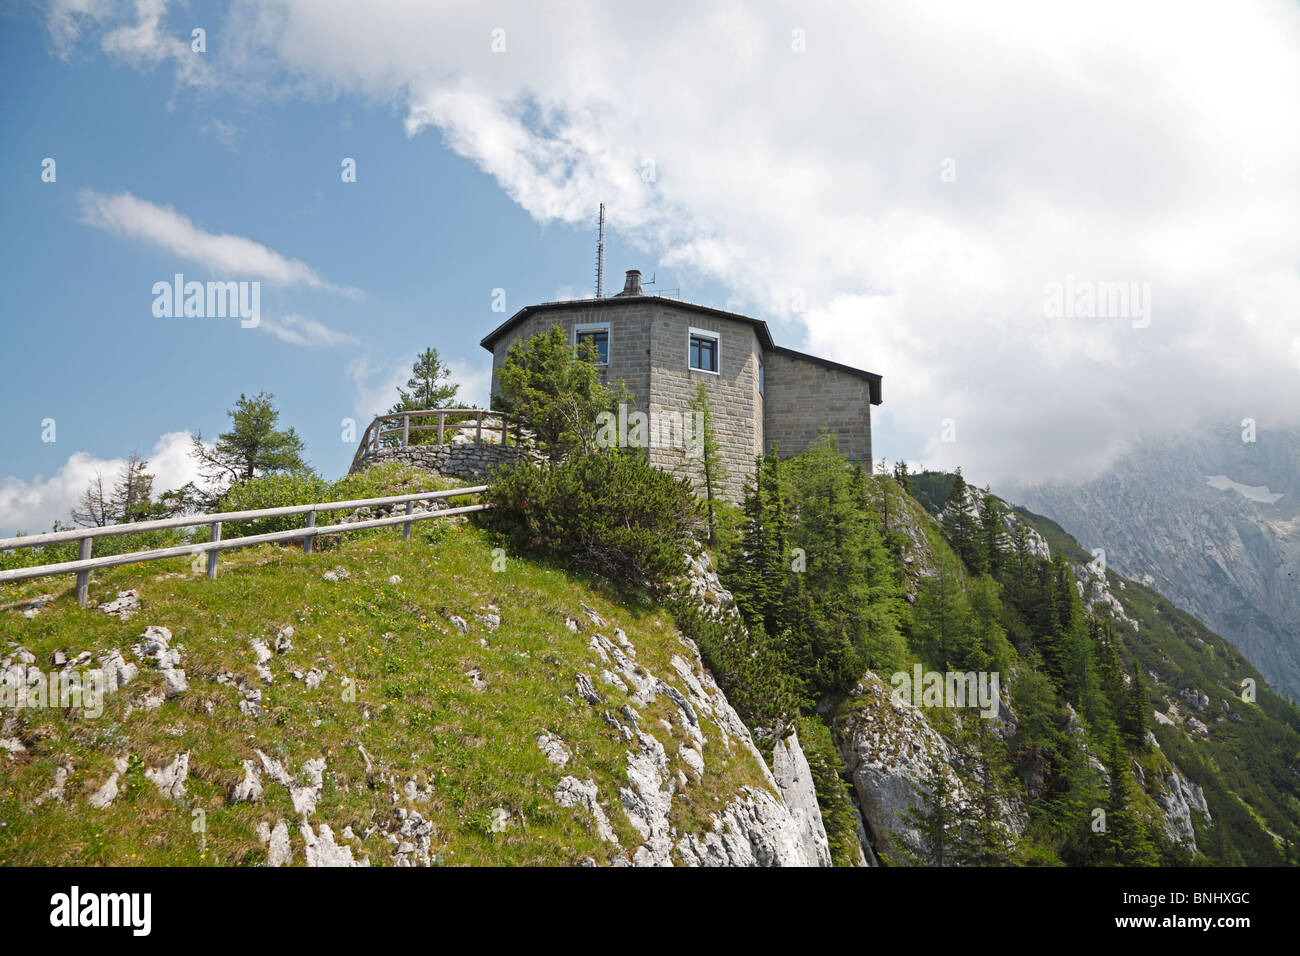 Hitler's Kehlsteinhaus - the Eagle's Nest - Obersalzburg, near Berchtesgaden in Germany. Stock Photo